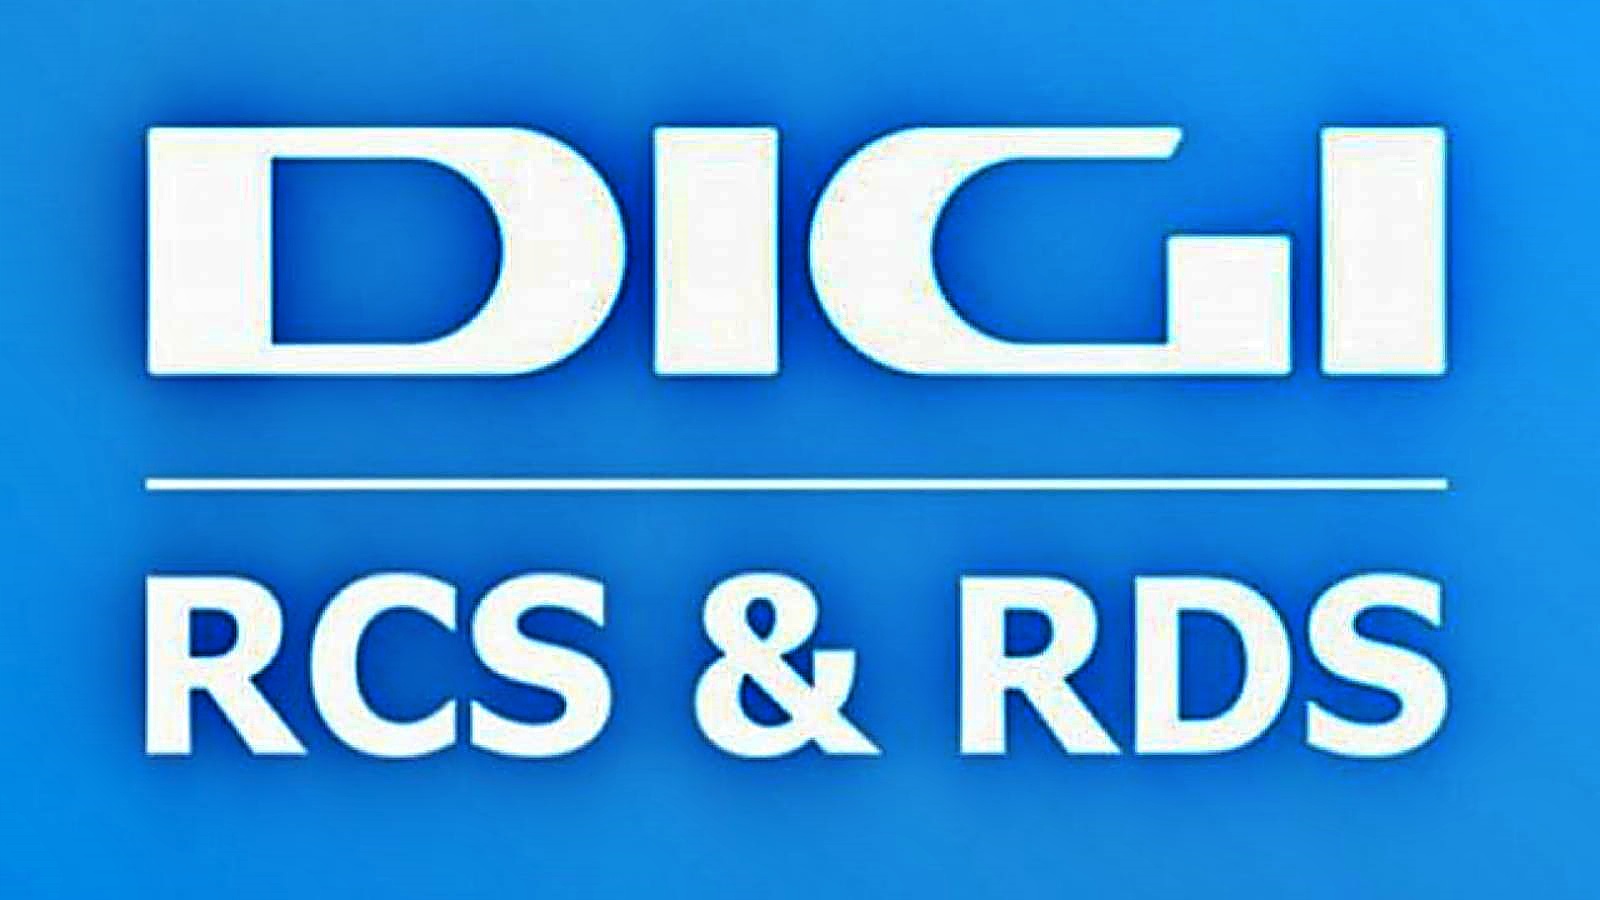 DIGI RCS & RDS Decizia IMPORTANTA Decembrie Anuntul Oficial Toti Clientii